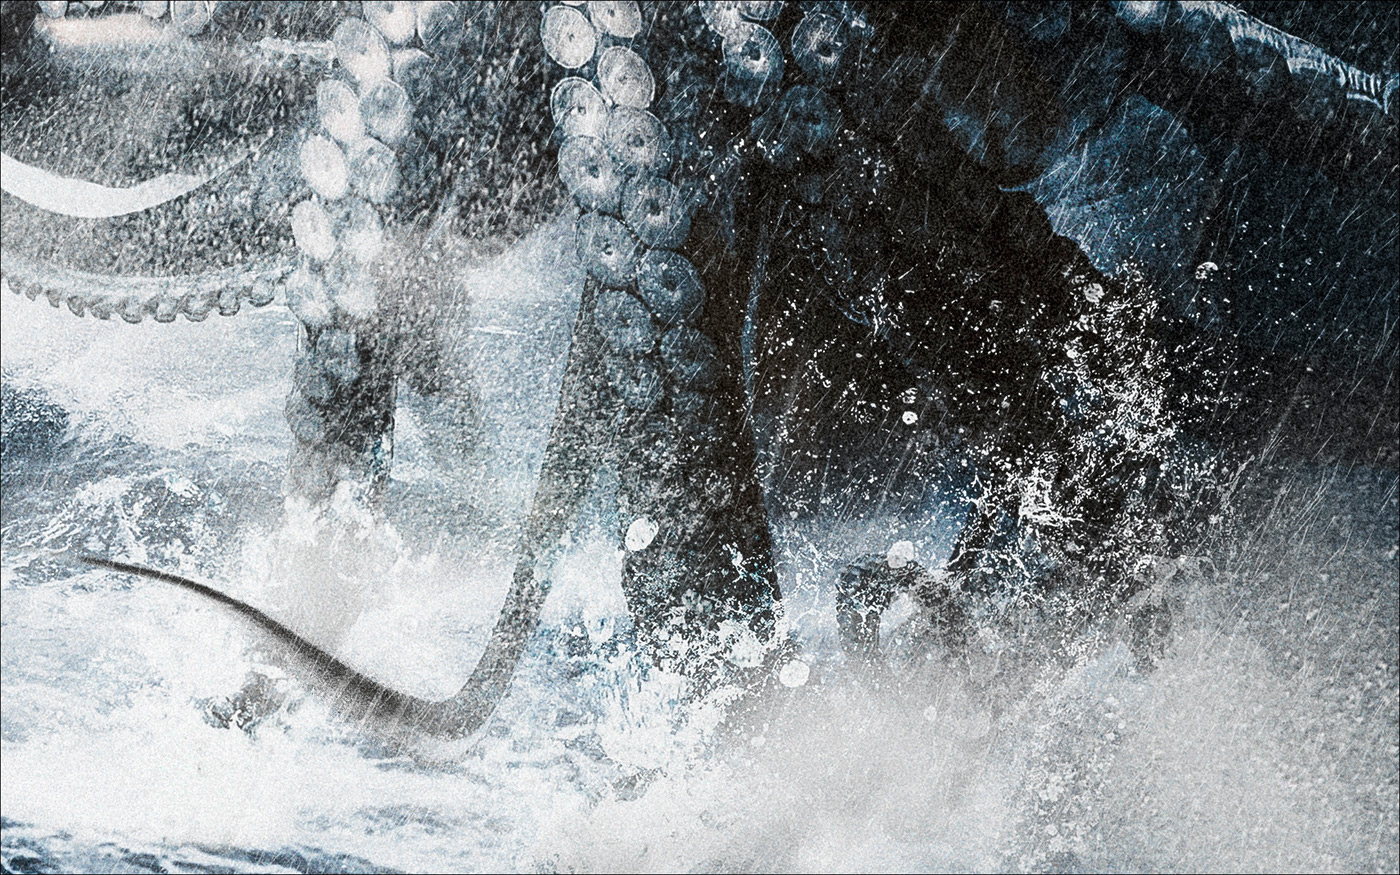 hp lovecraft lovecraft cthulhu Ocean storm photo illustration  nathan spotts Elder God compositing photoshop